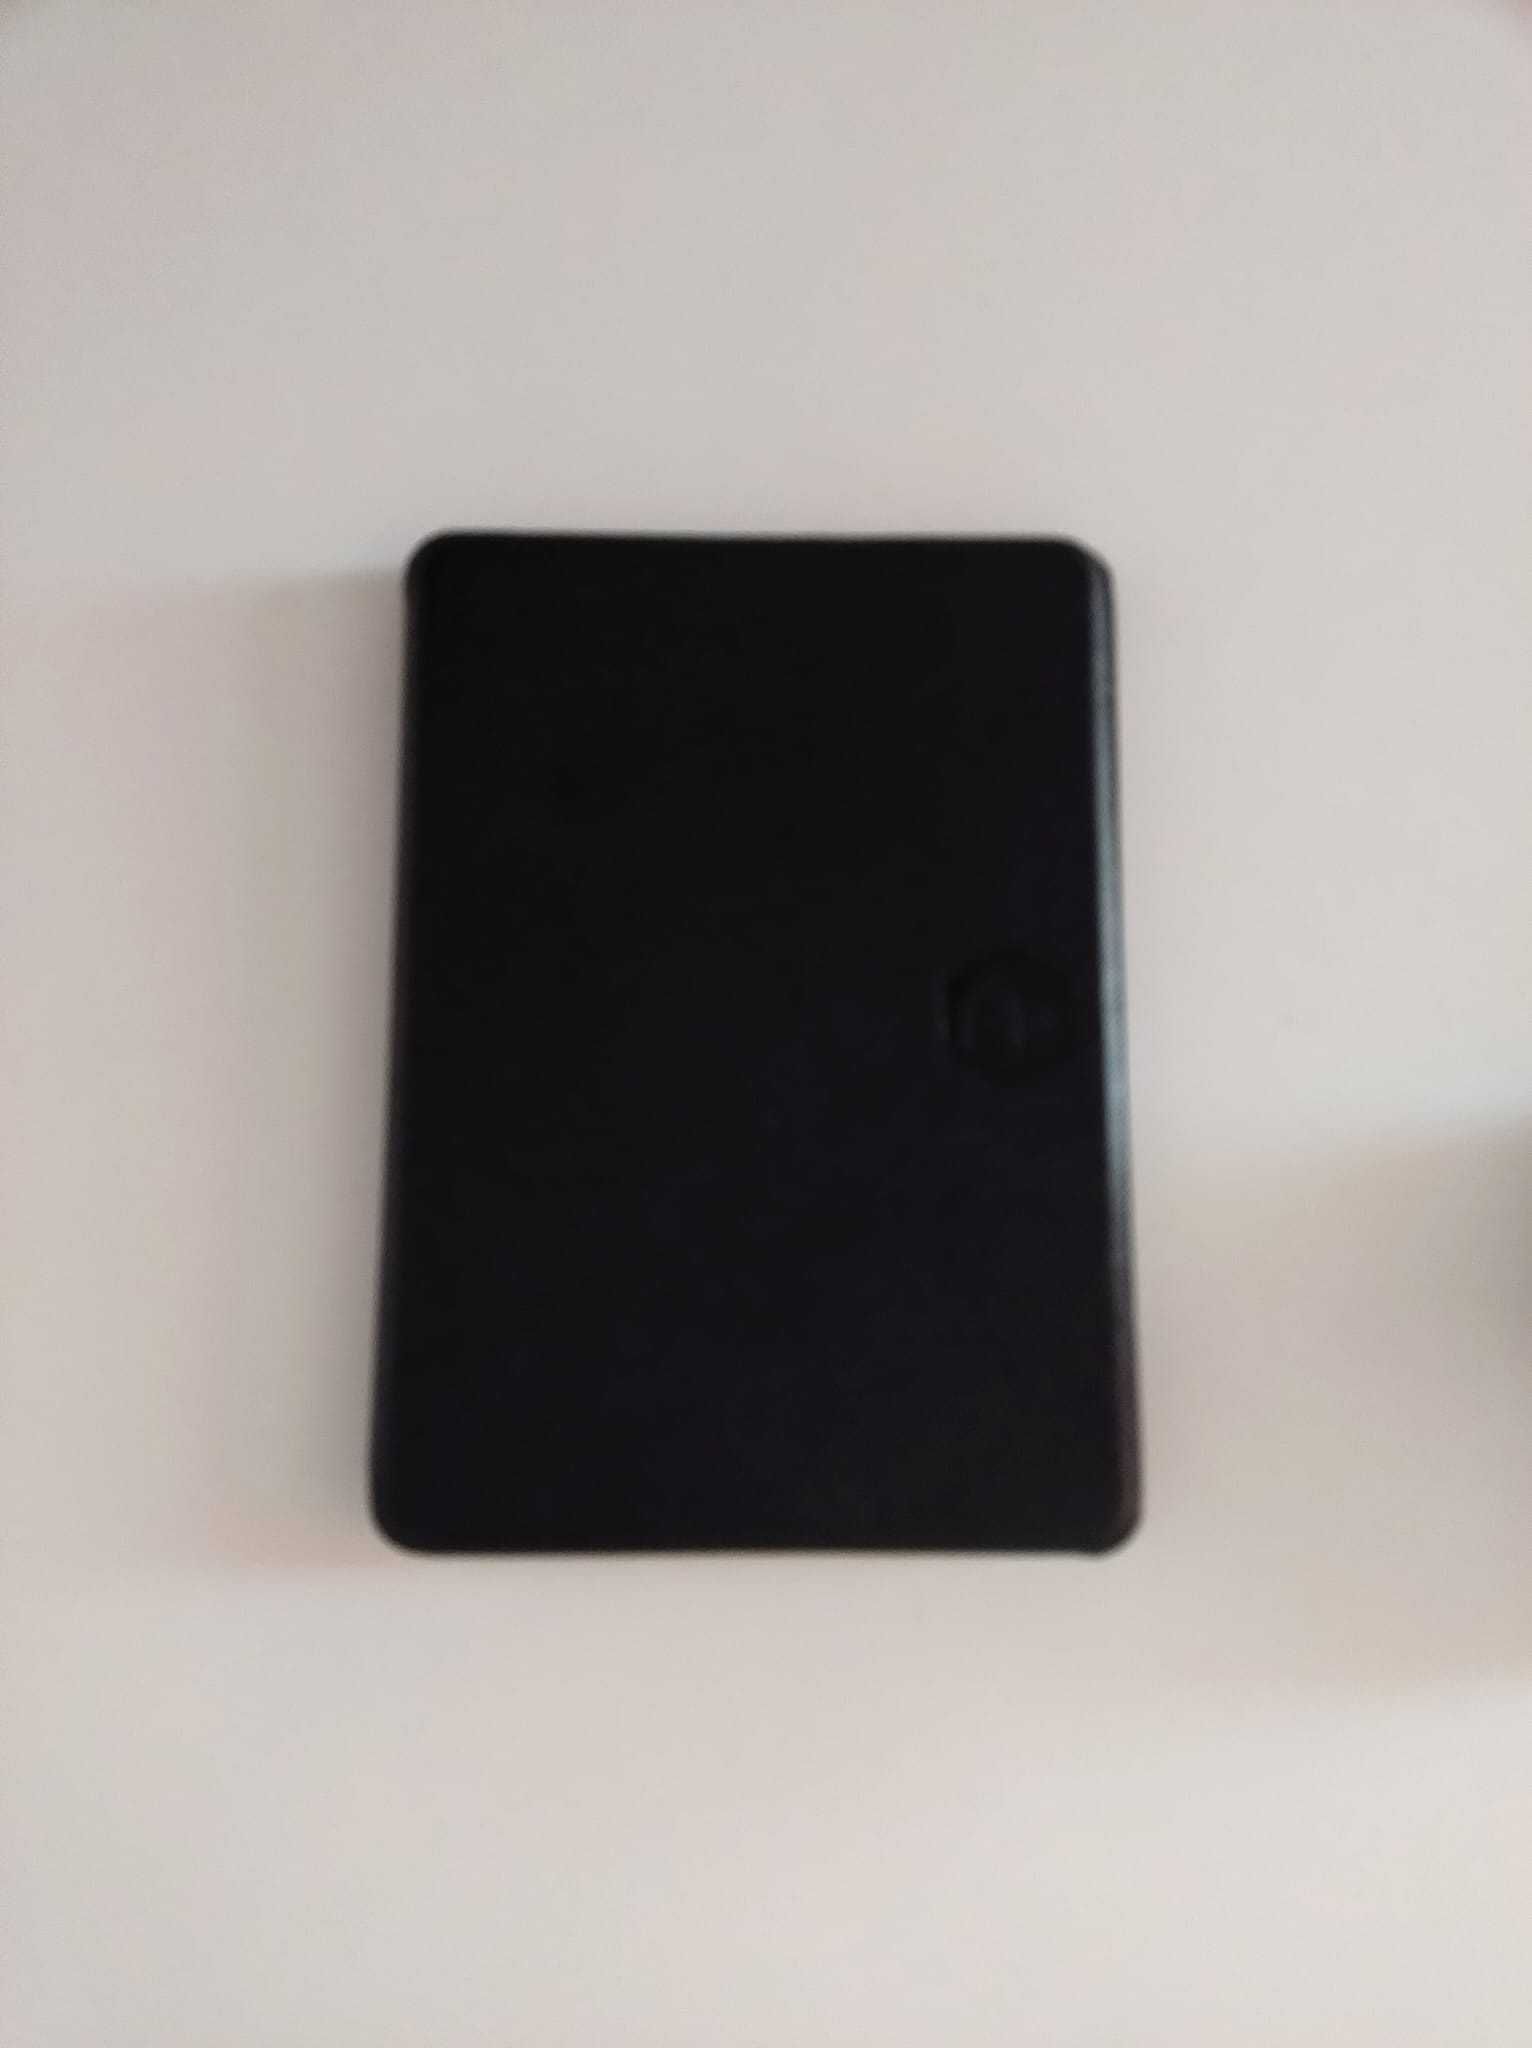 Vand Kindle 2019, WiFi, 8 GB, 167 ppi, Negru+ husa neagra